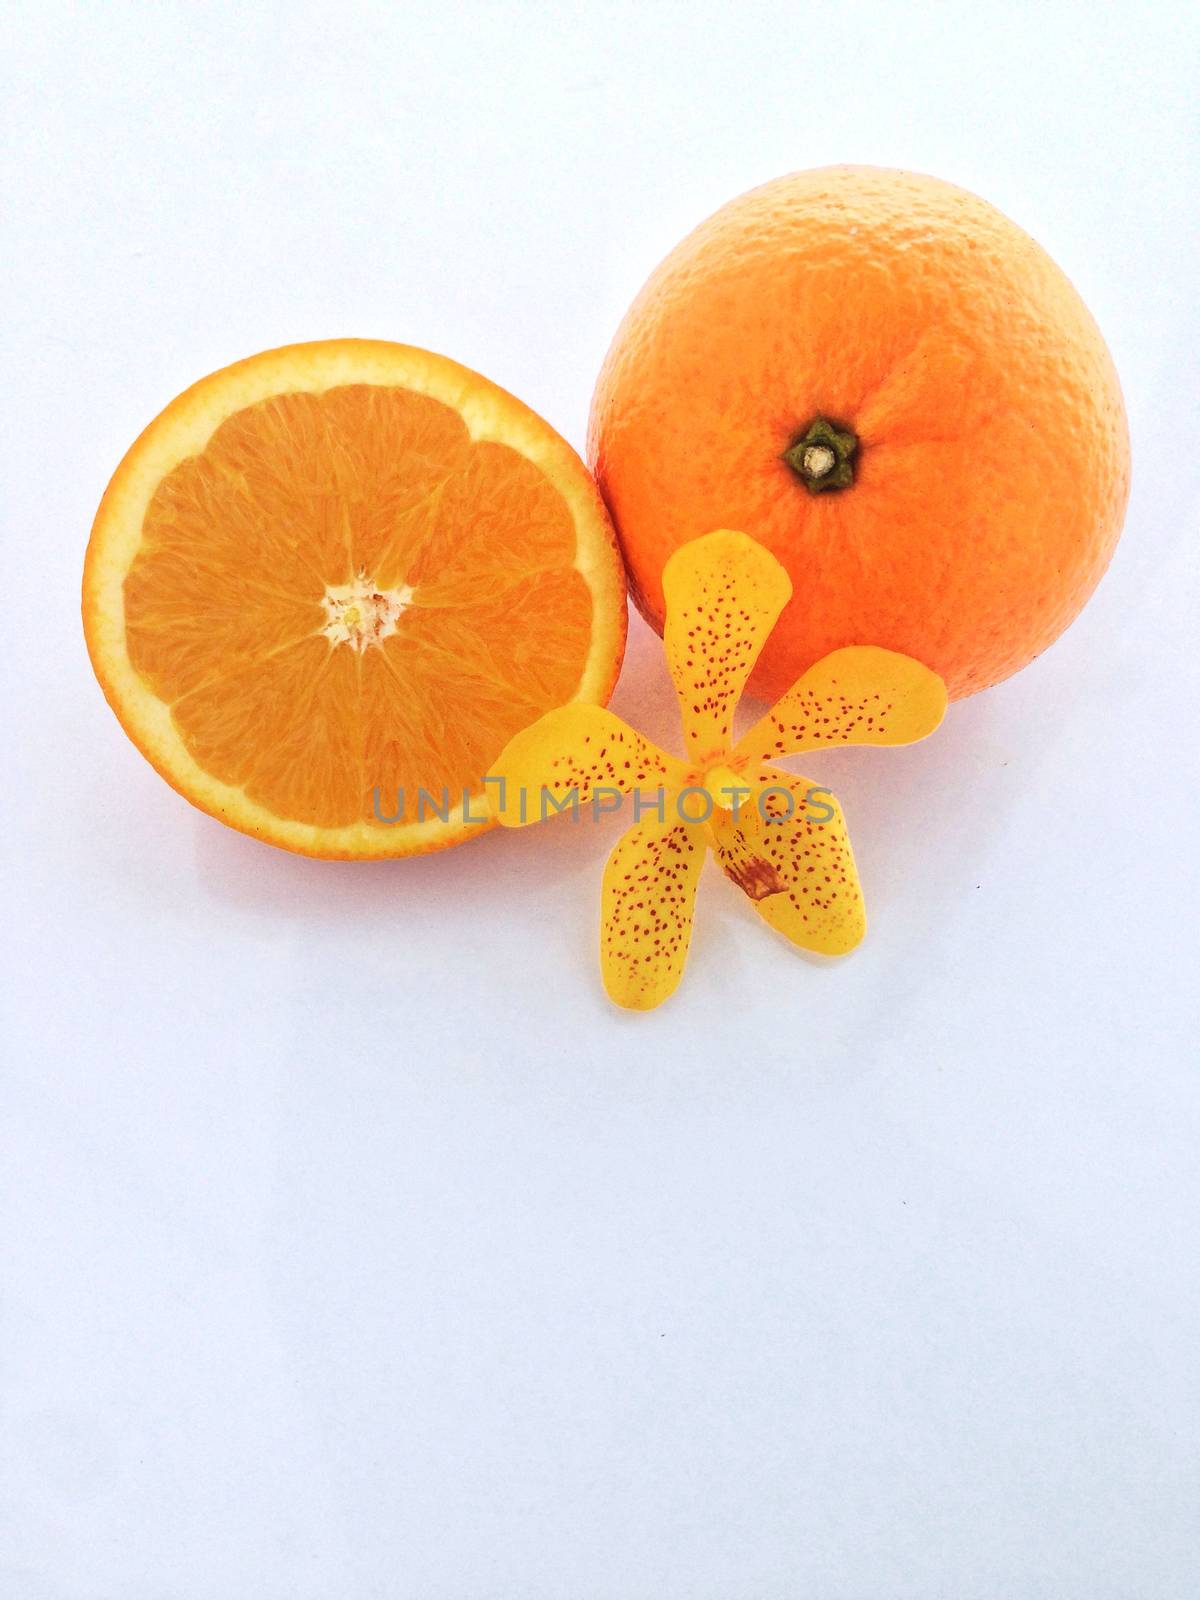 Fresh orange and slices on white background. by Bowonpat